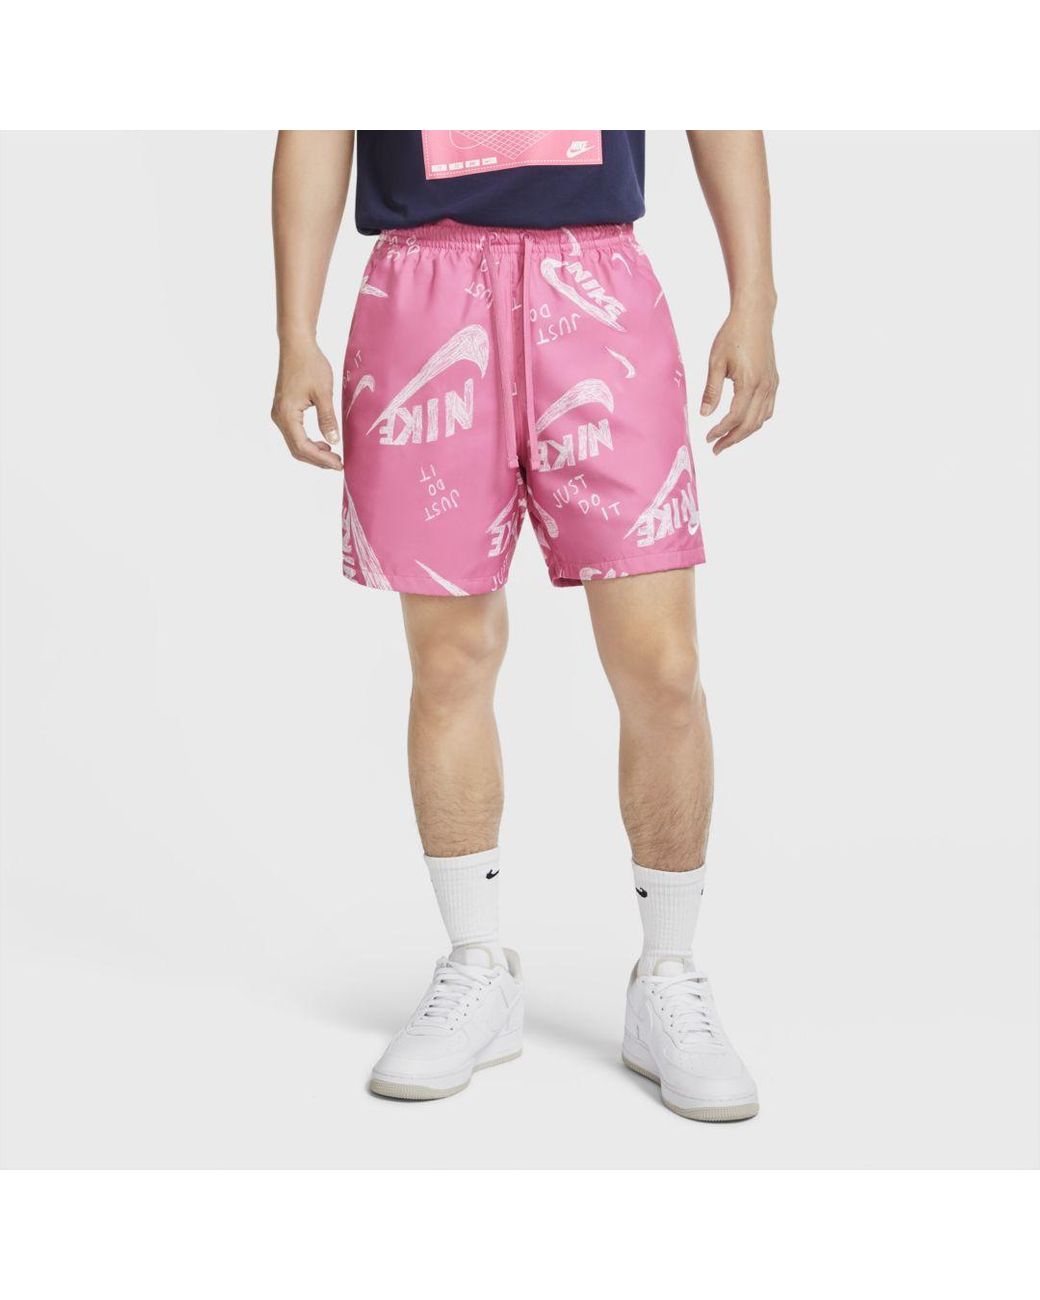 Nike Pink Shorts Mens | vlr.eng.br